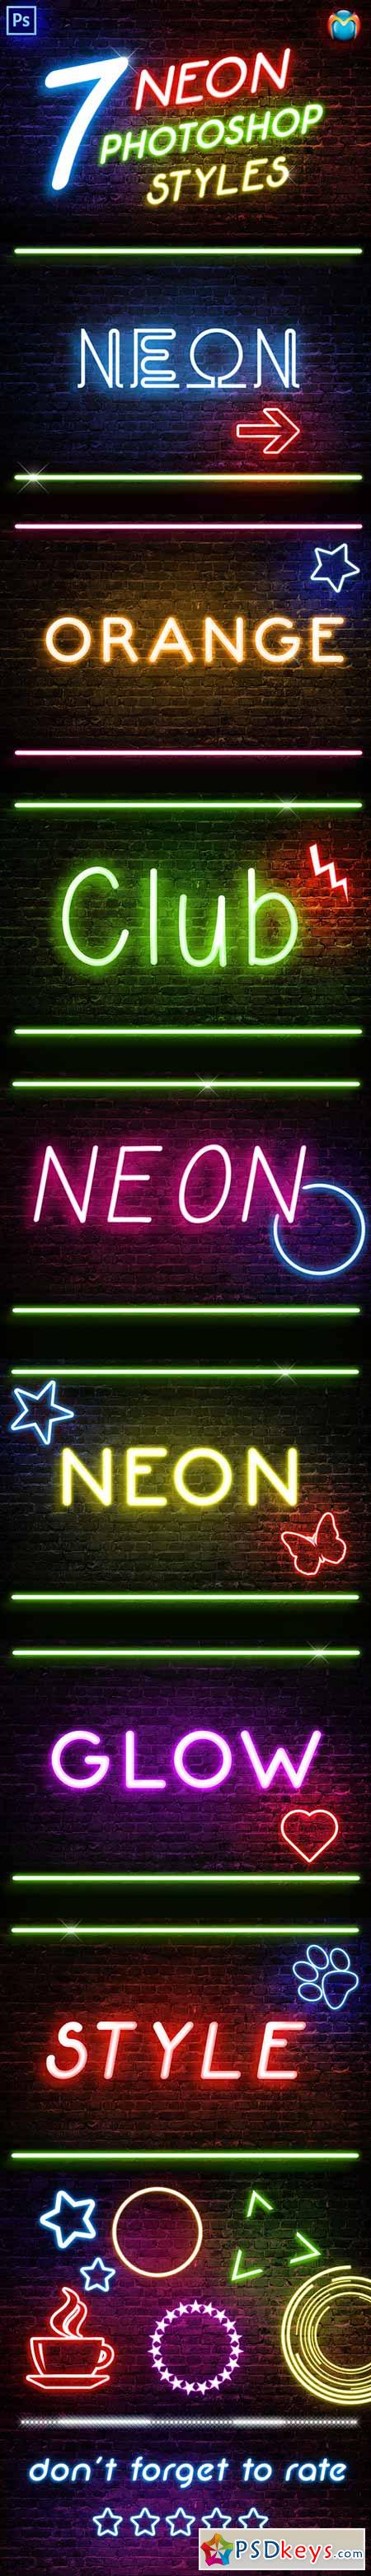 Neon Photoshop Styles 9956867